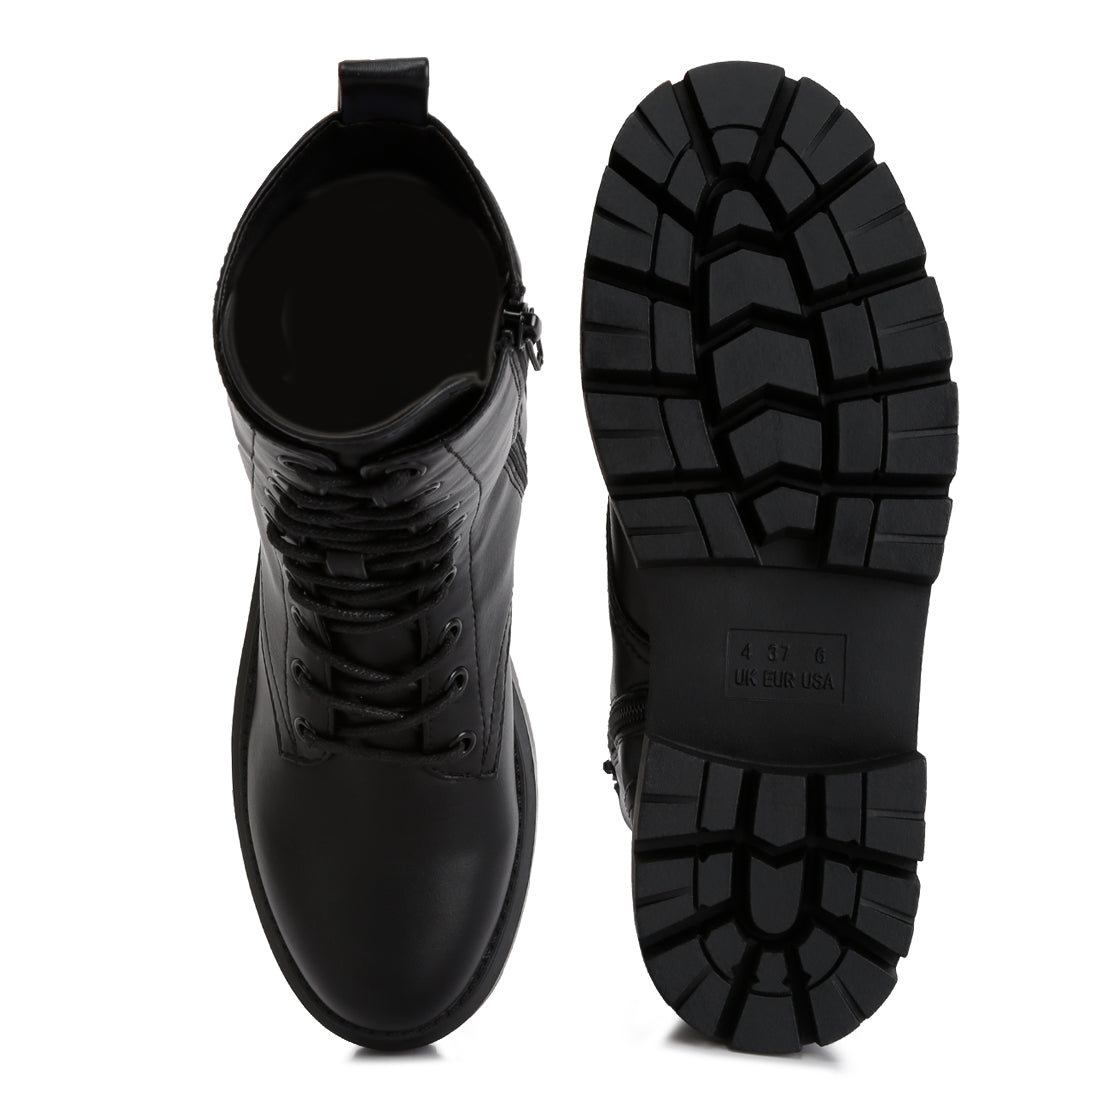 Black Ankle Combat Platform Boots